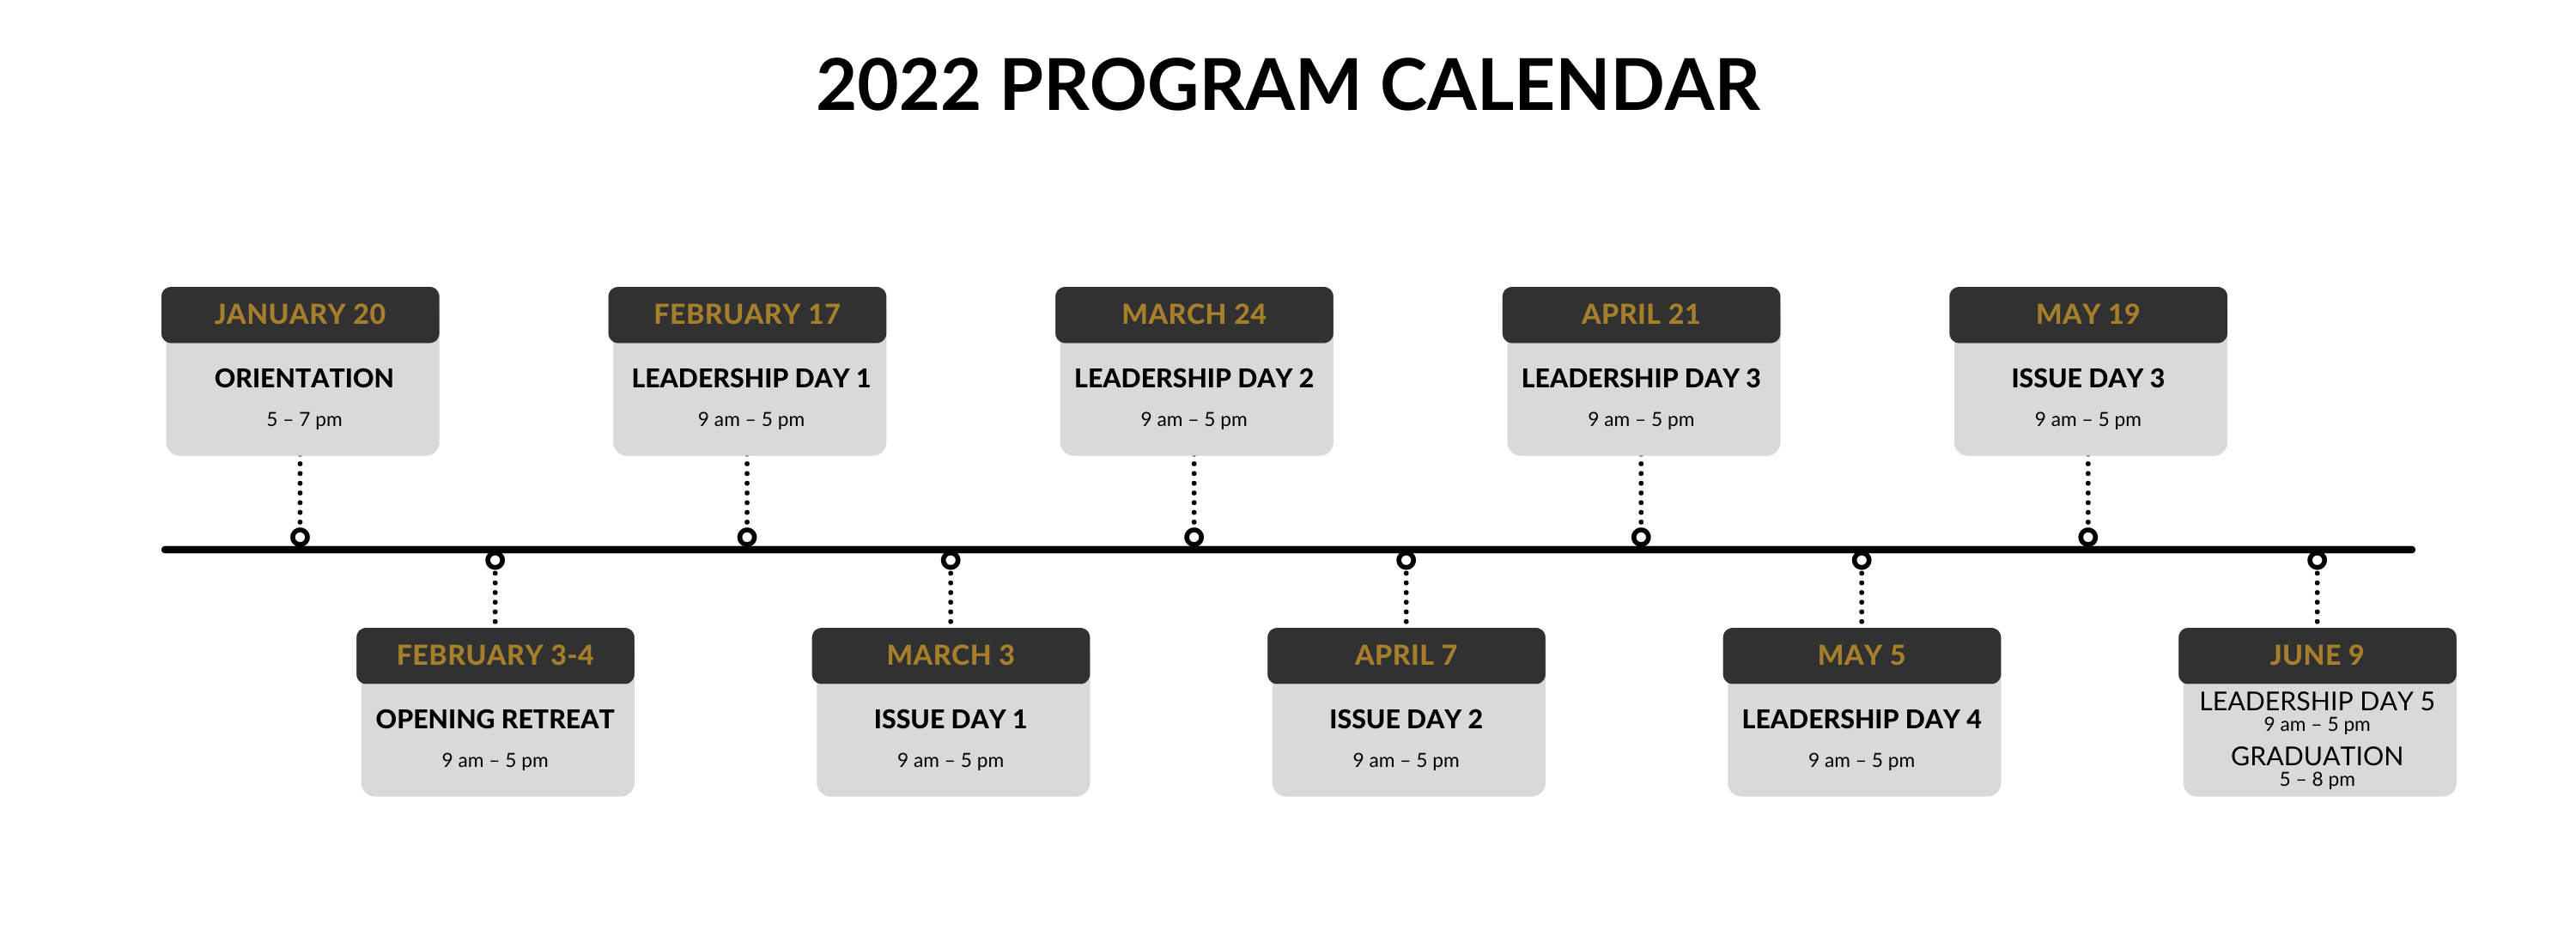 2022 Program Calendar